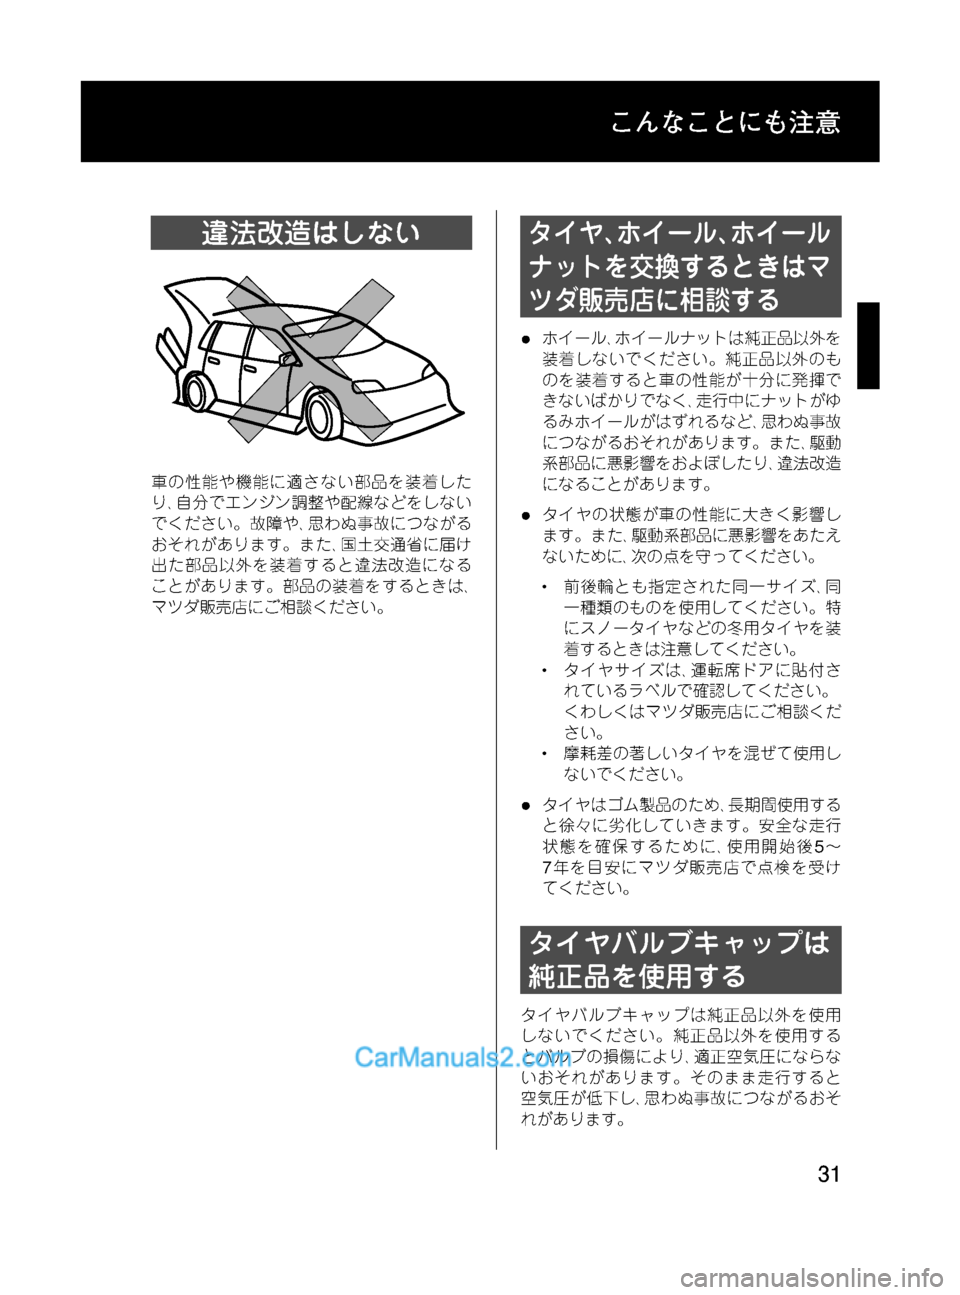 MAZDA MODEL VERISA 2007  ベリーサ｜取扱説明書 (in Japanese) Black plate (31,1)
違法改造はしない
車の性能や機能に適さない部品を装着した
り､自分でエンジン調整や配線などをしない
でください。故障や､思わ�